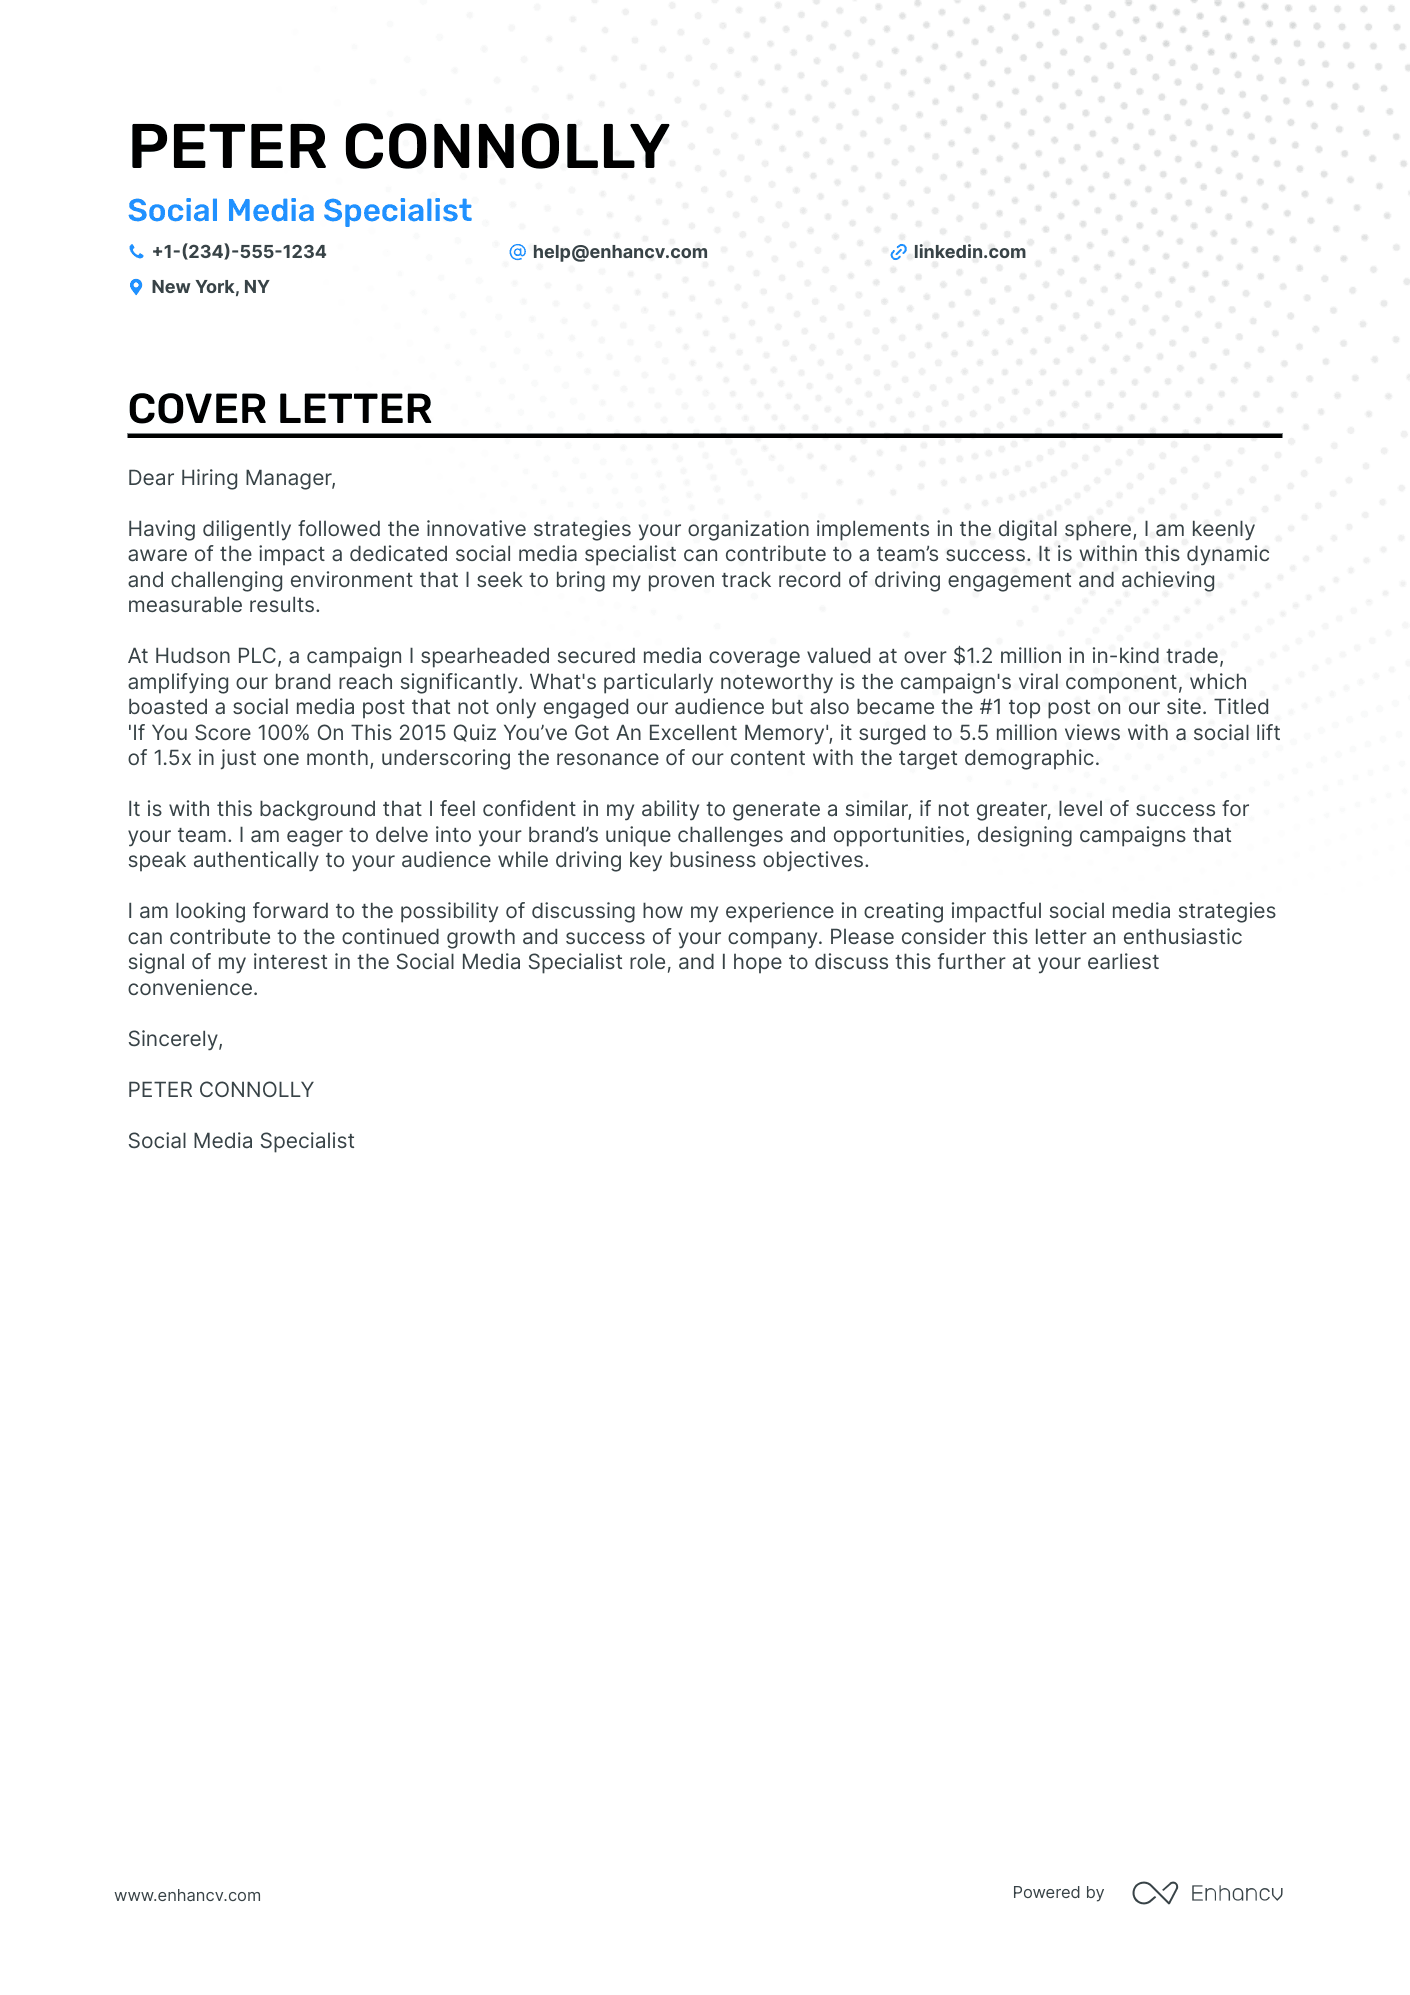 Social Media Specialist cover letter